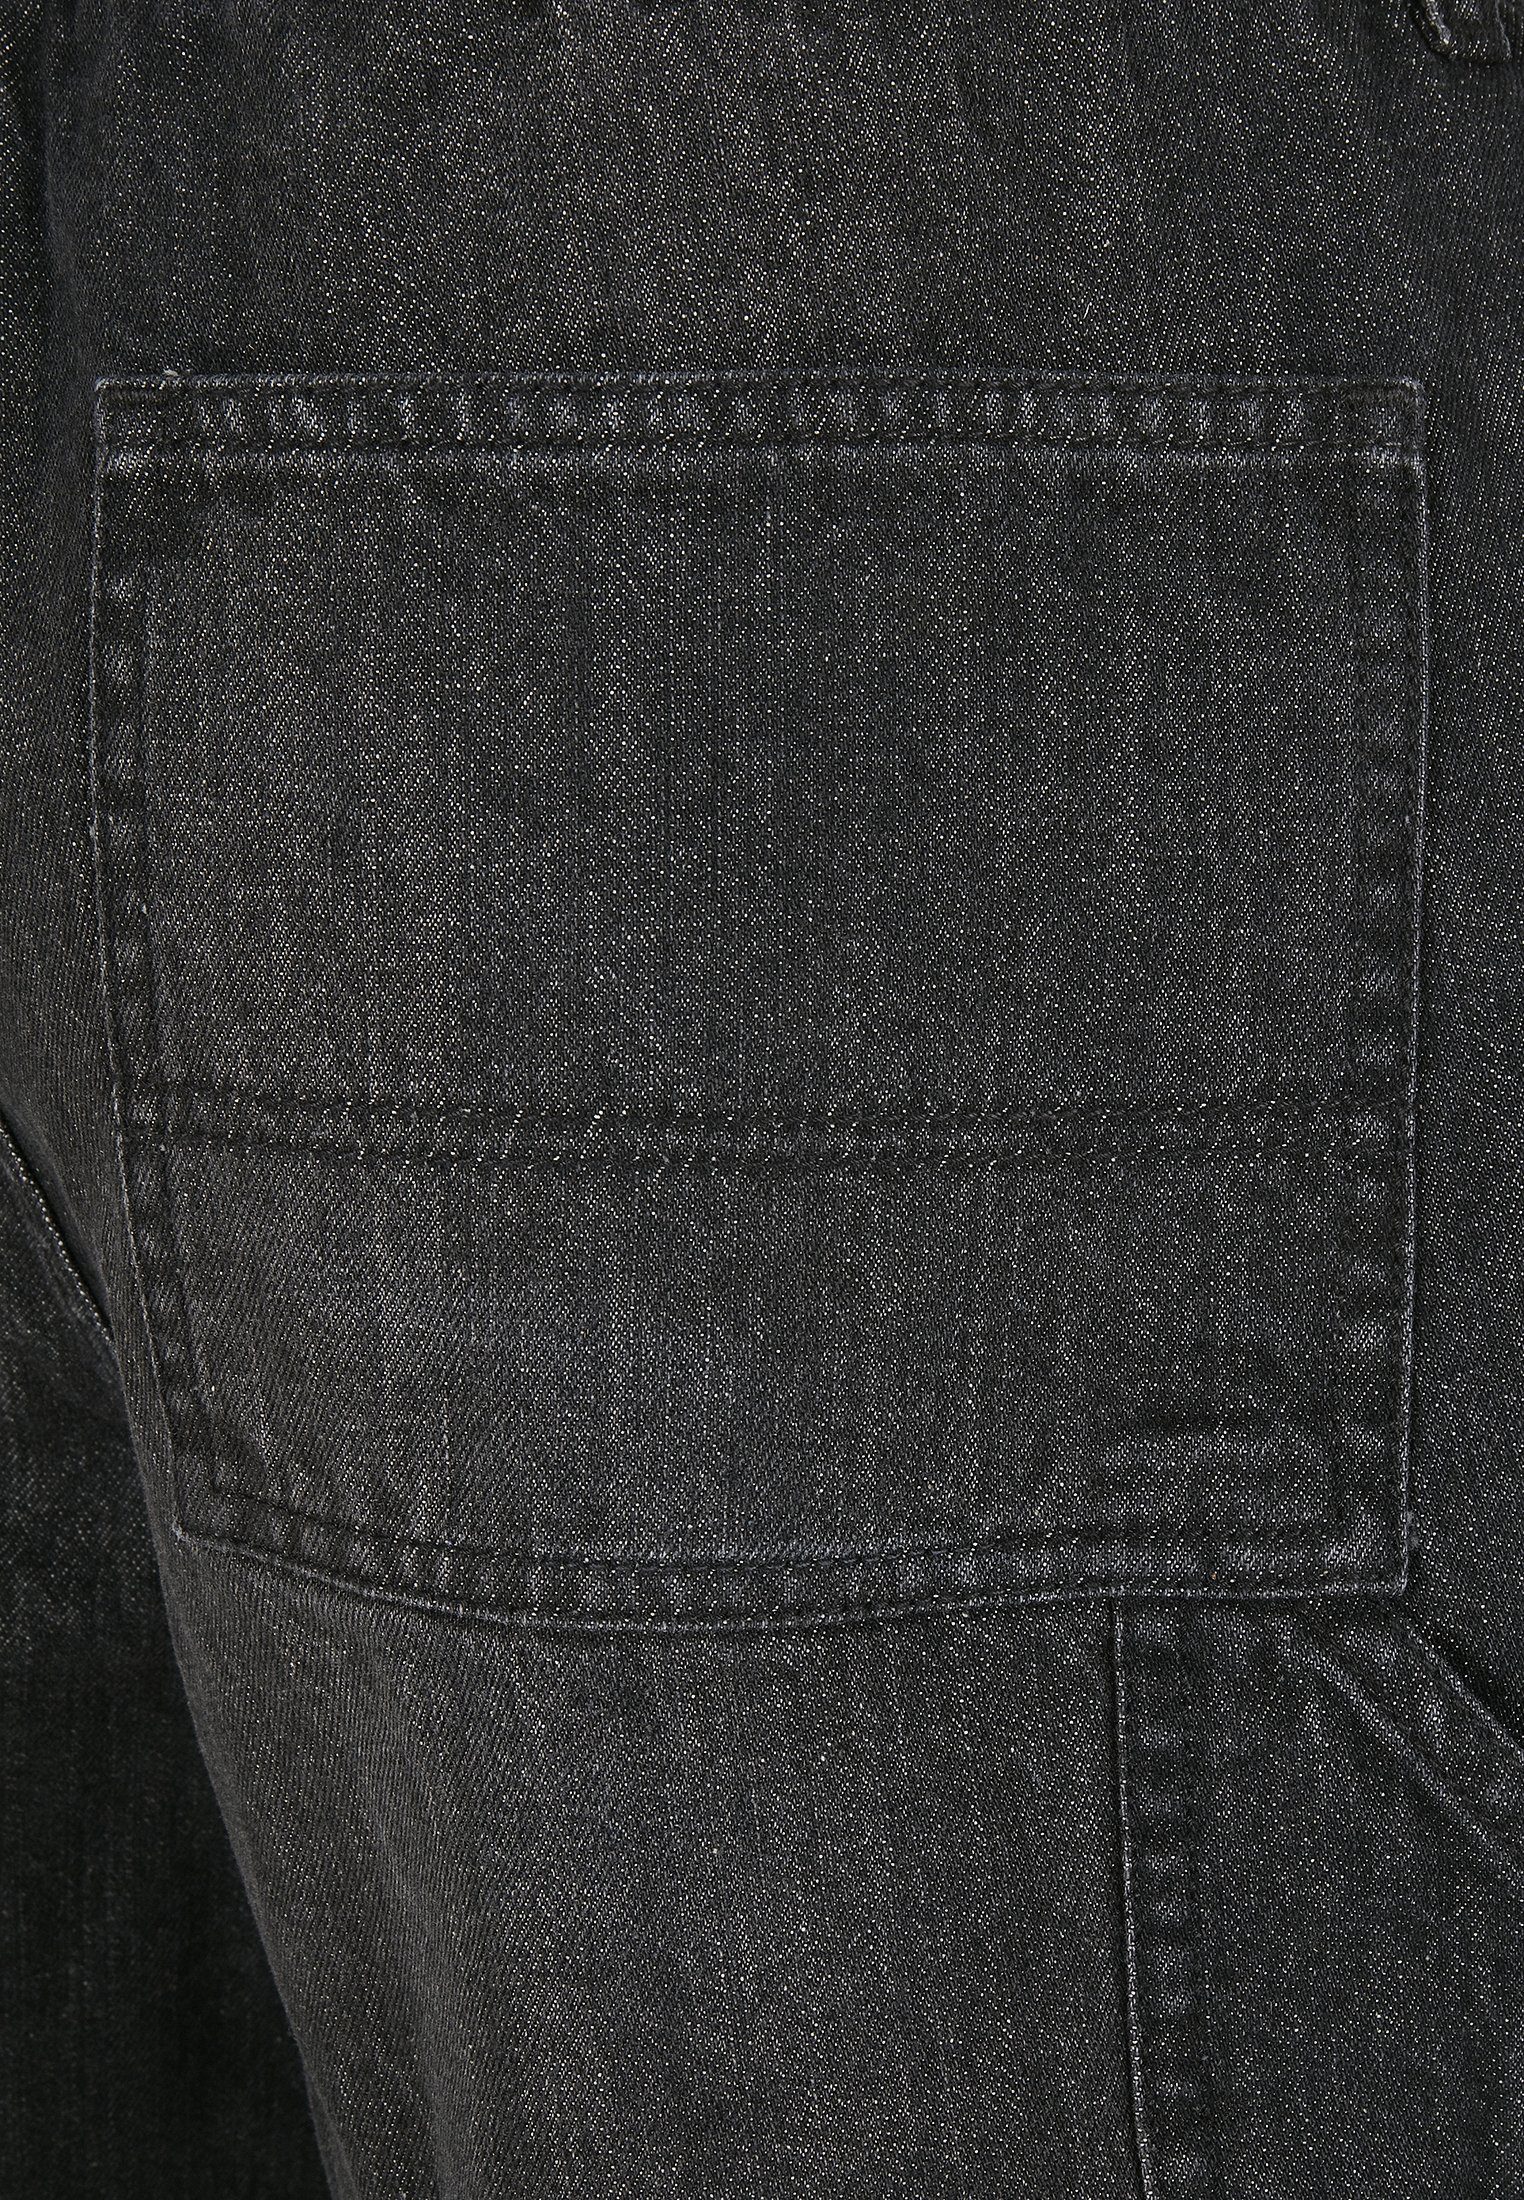 realblack Jeans (1-tlg) URBAN Stoffhose washed Shorts Carpenter CLASSICS Herren